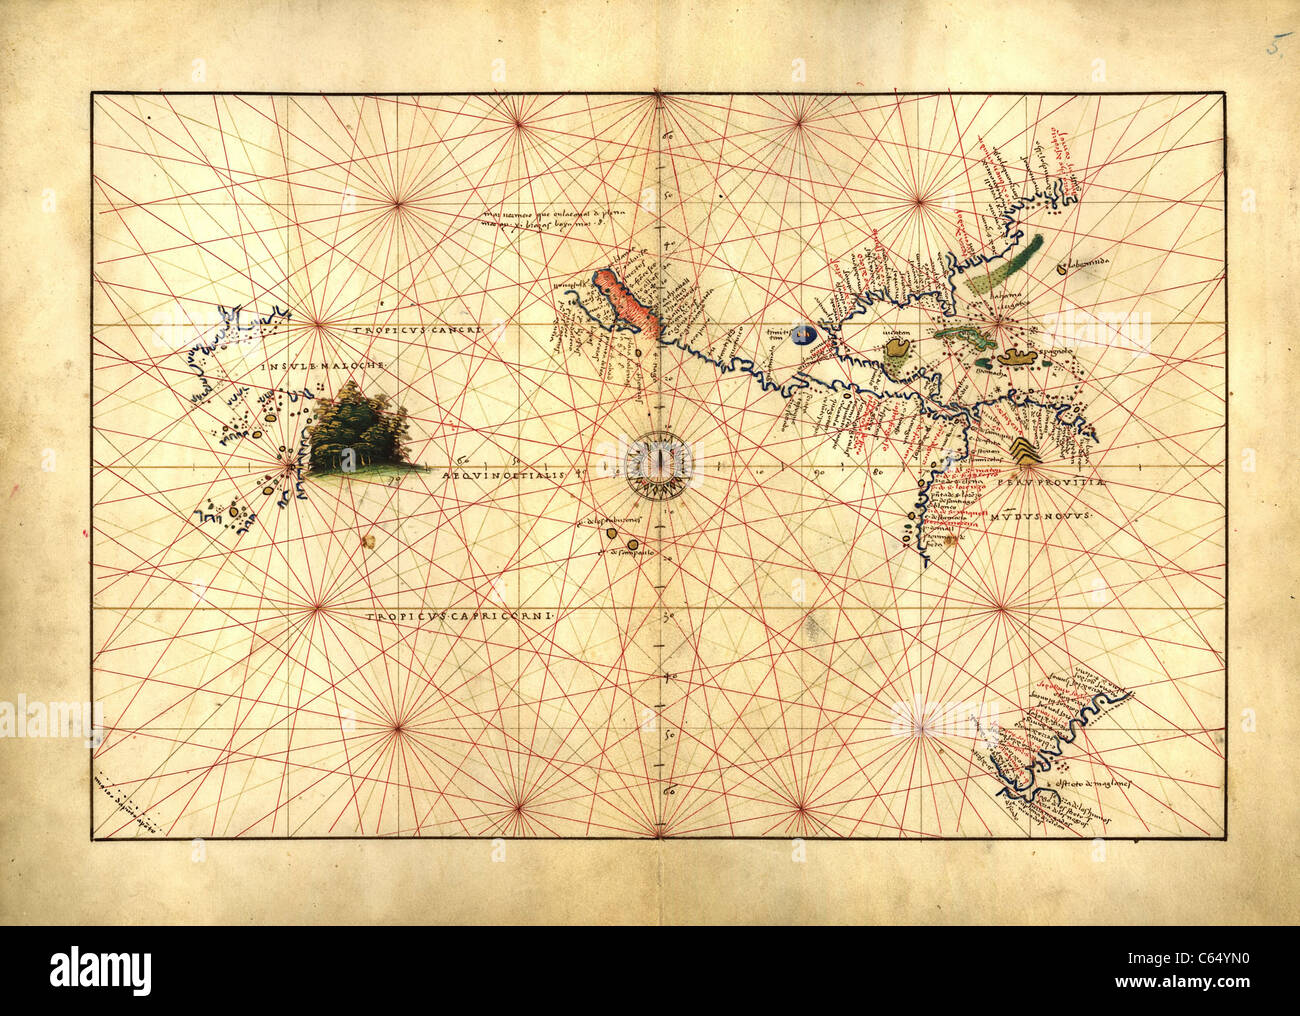 Pacific Ocean - Antiquarian Map or Portolan Chart from 16th Century Portolan Atlas Stock Photo